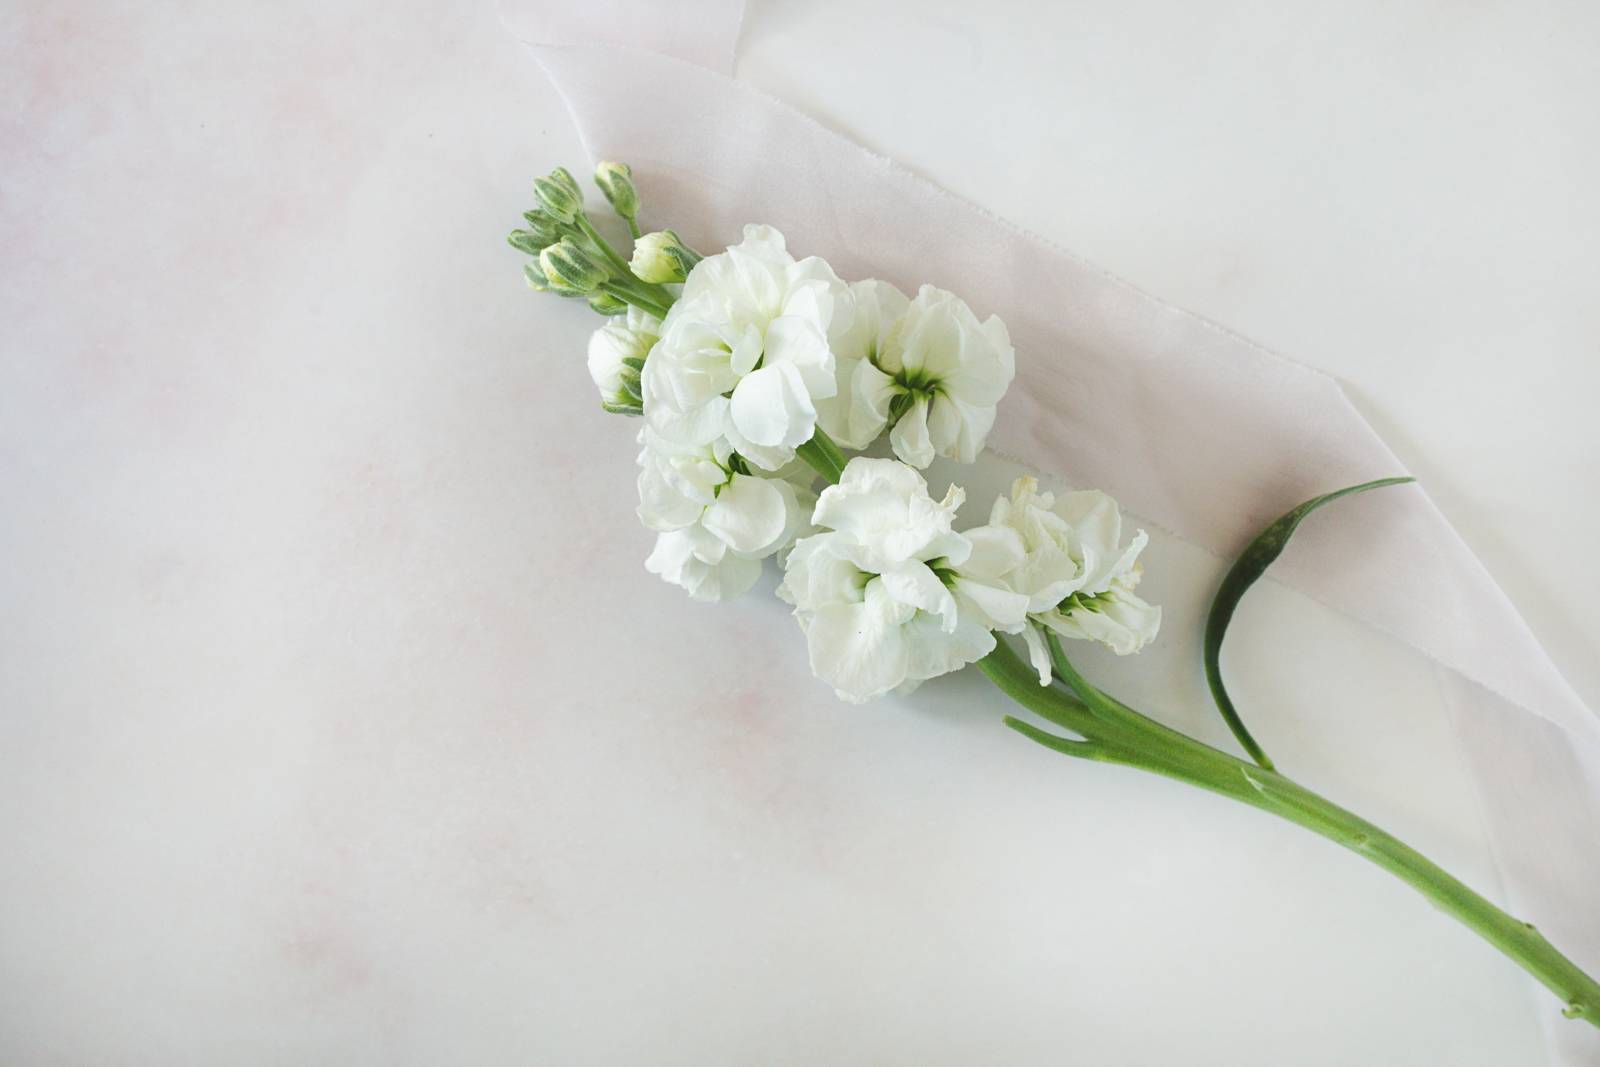 Stock, wedding flower